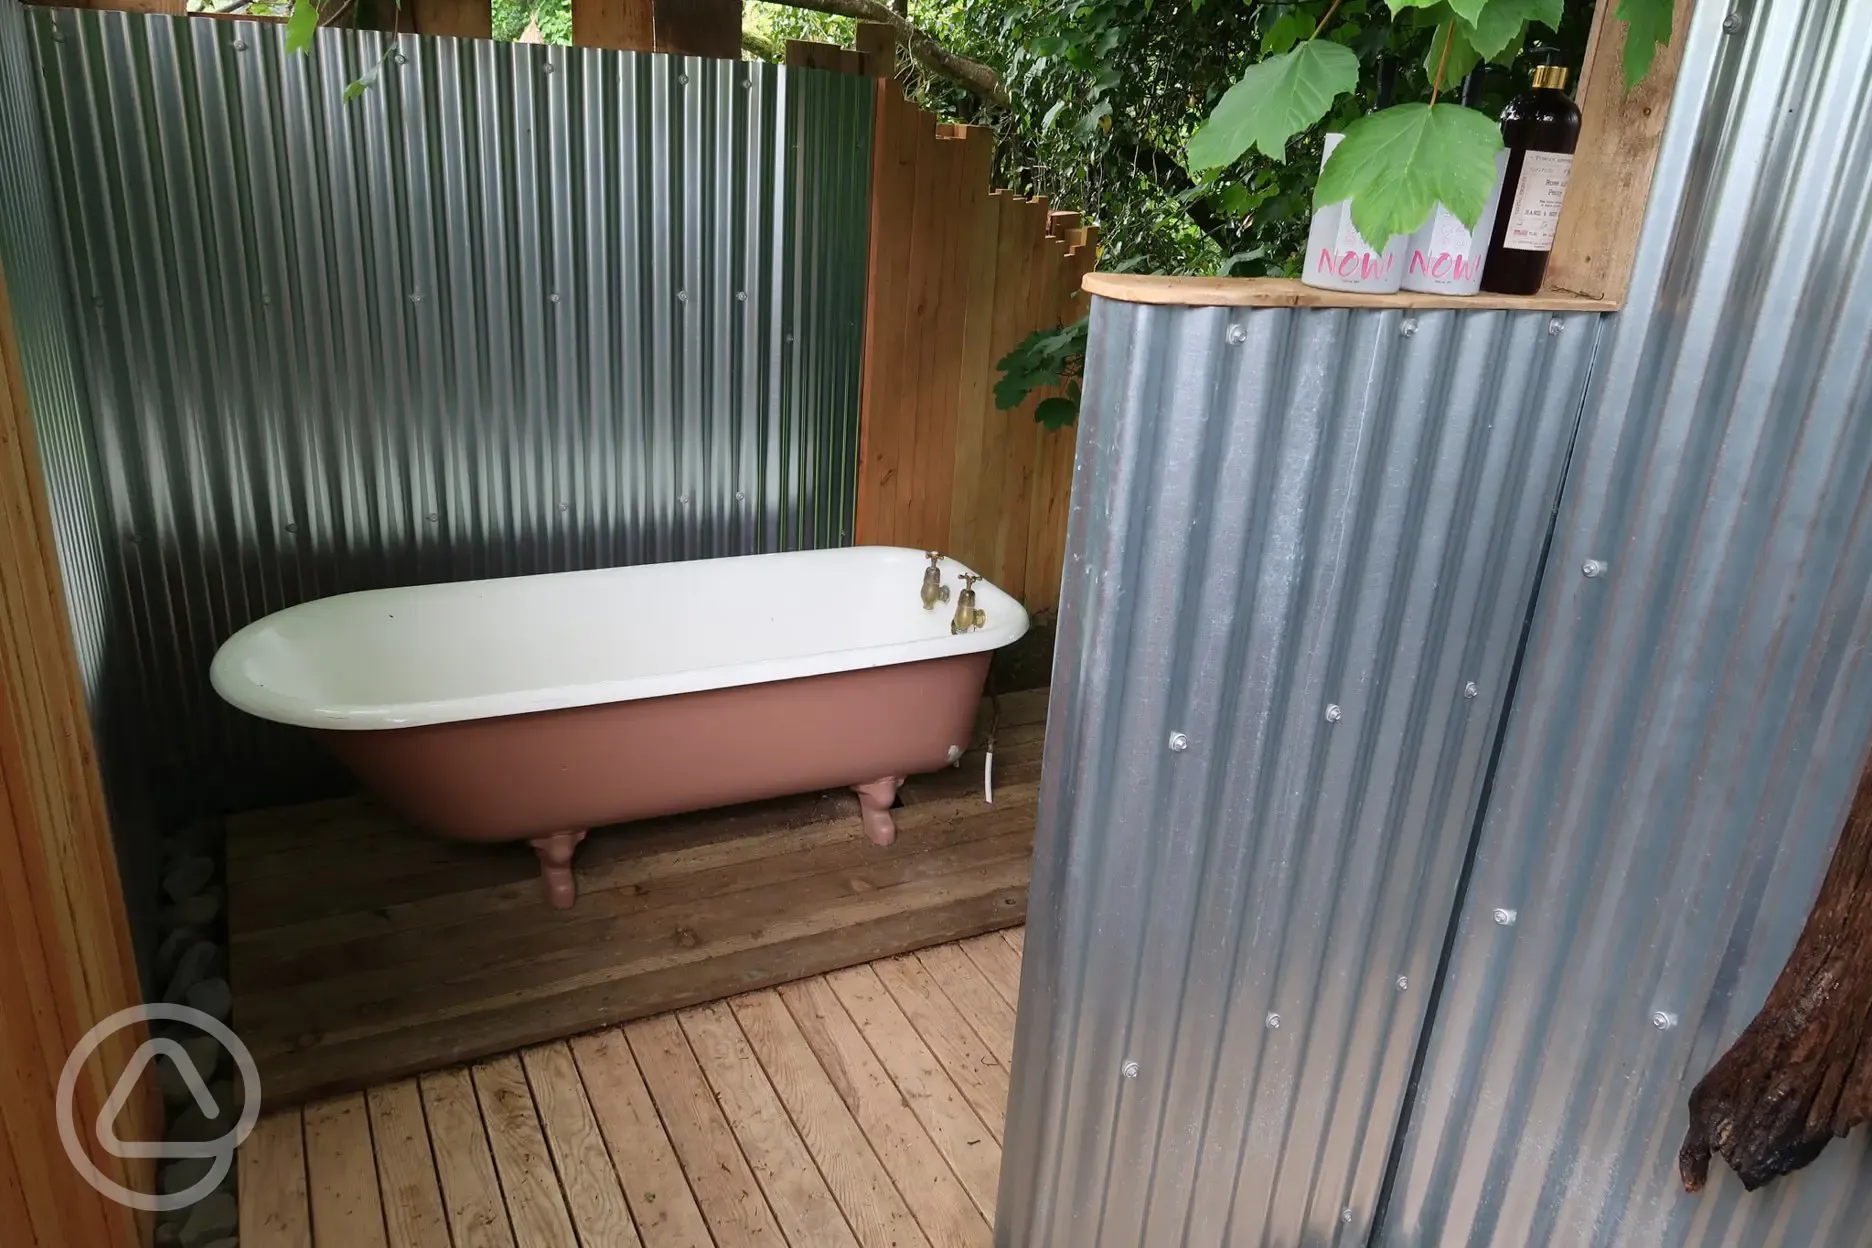 Cabin bath tub